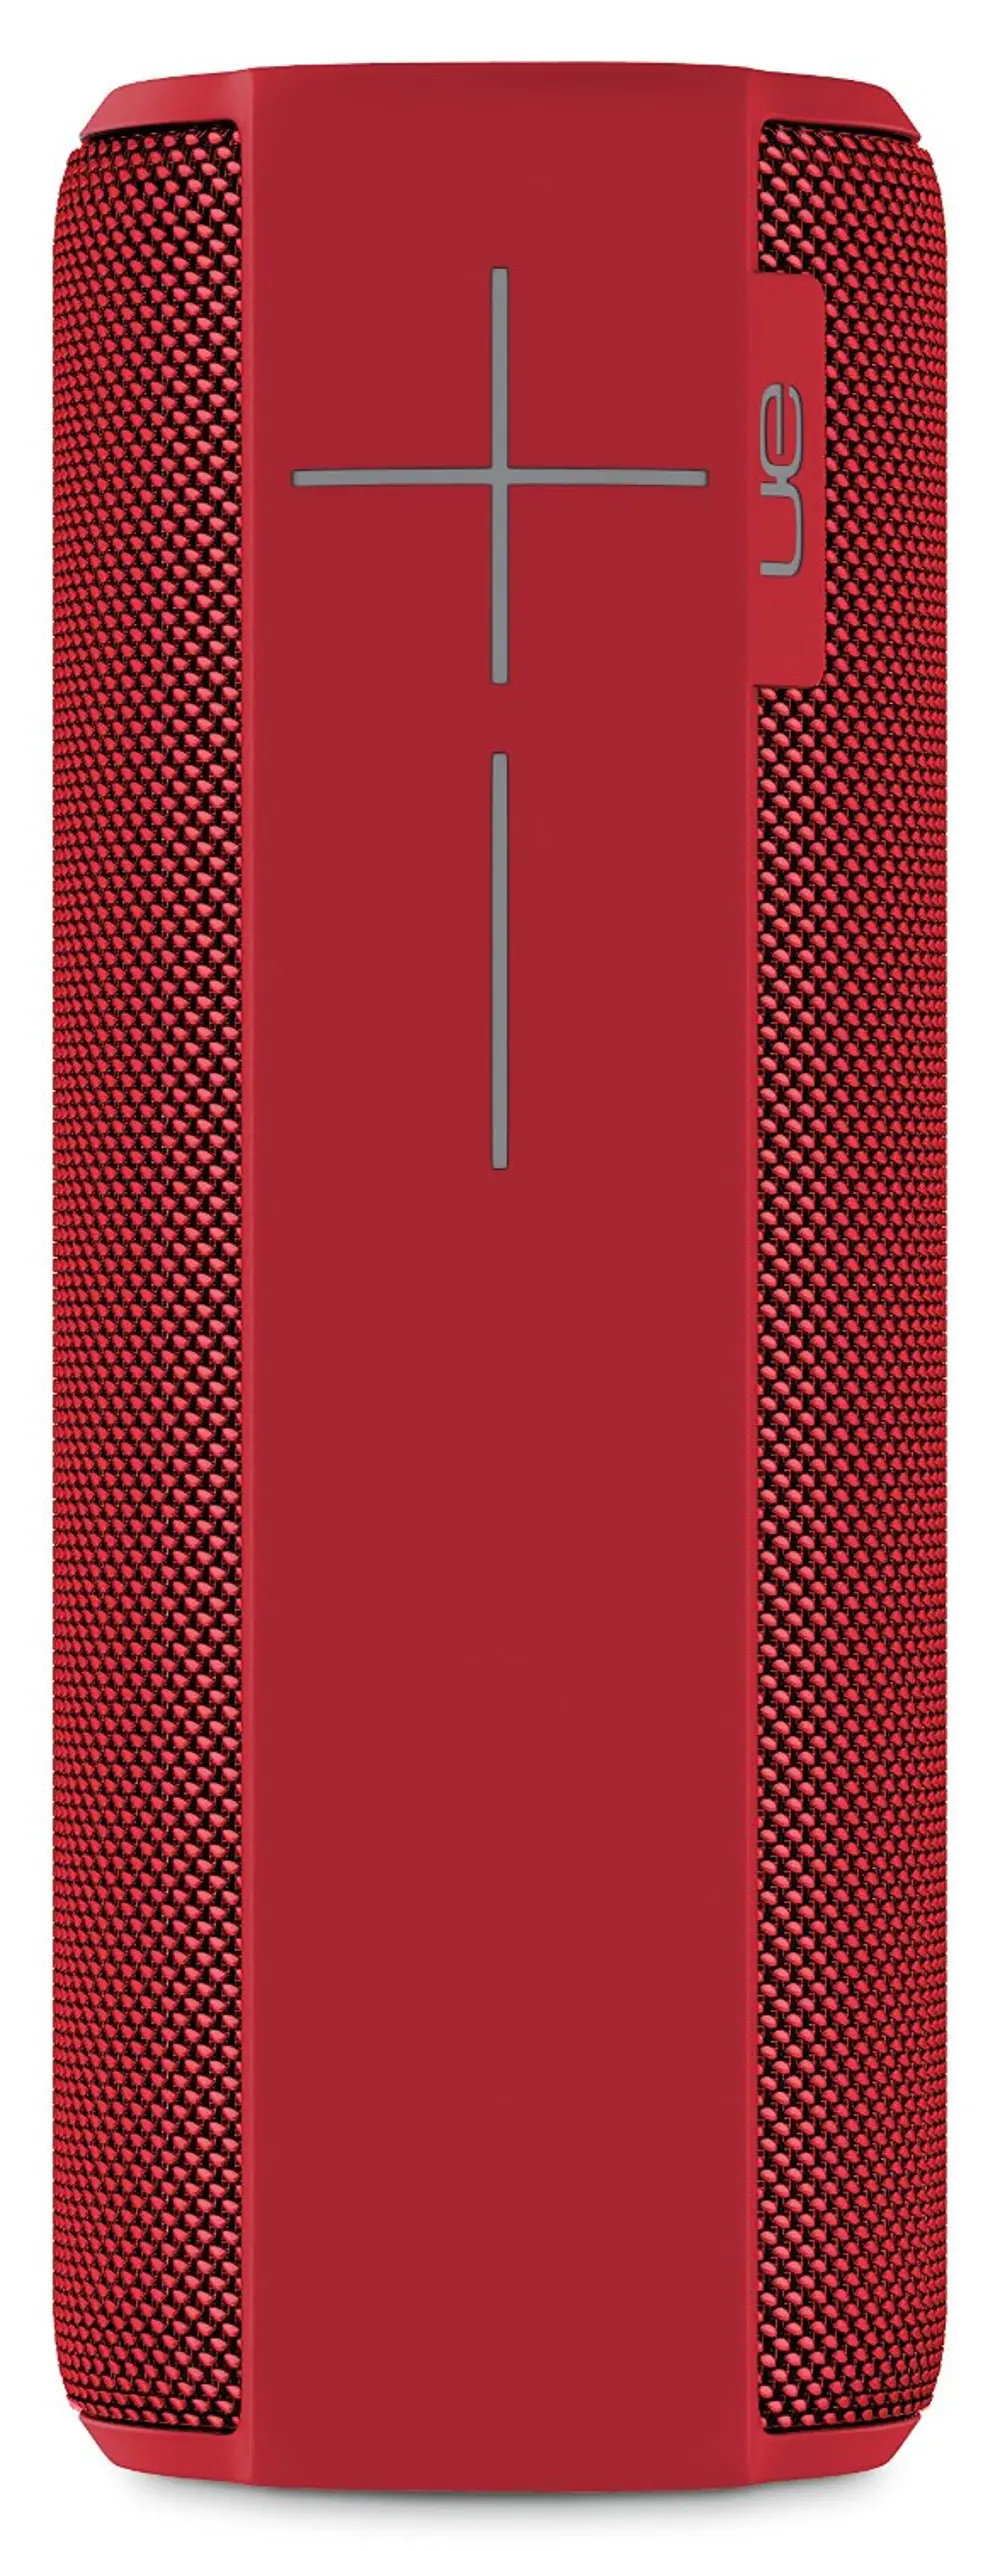 UE,MEGABOOM-SPKR,RED Ultimate Ears MEGABOOM Portable Wireless Speaker - Red-1